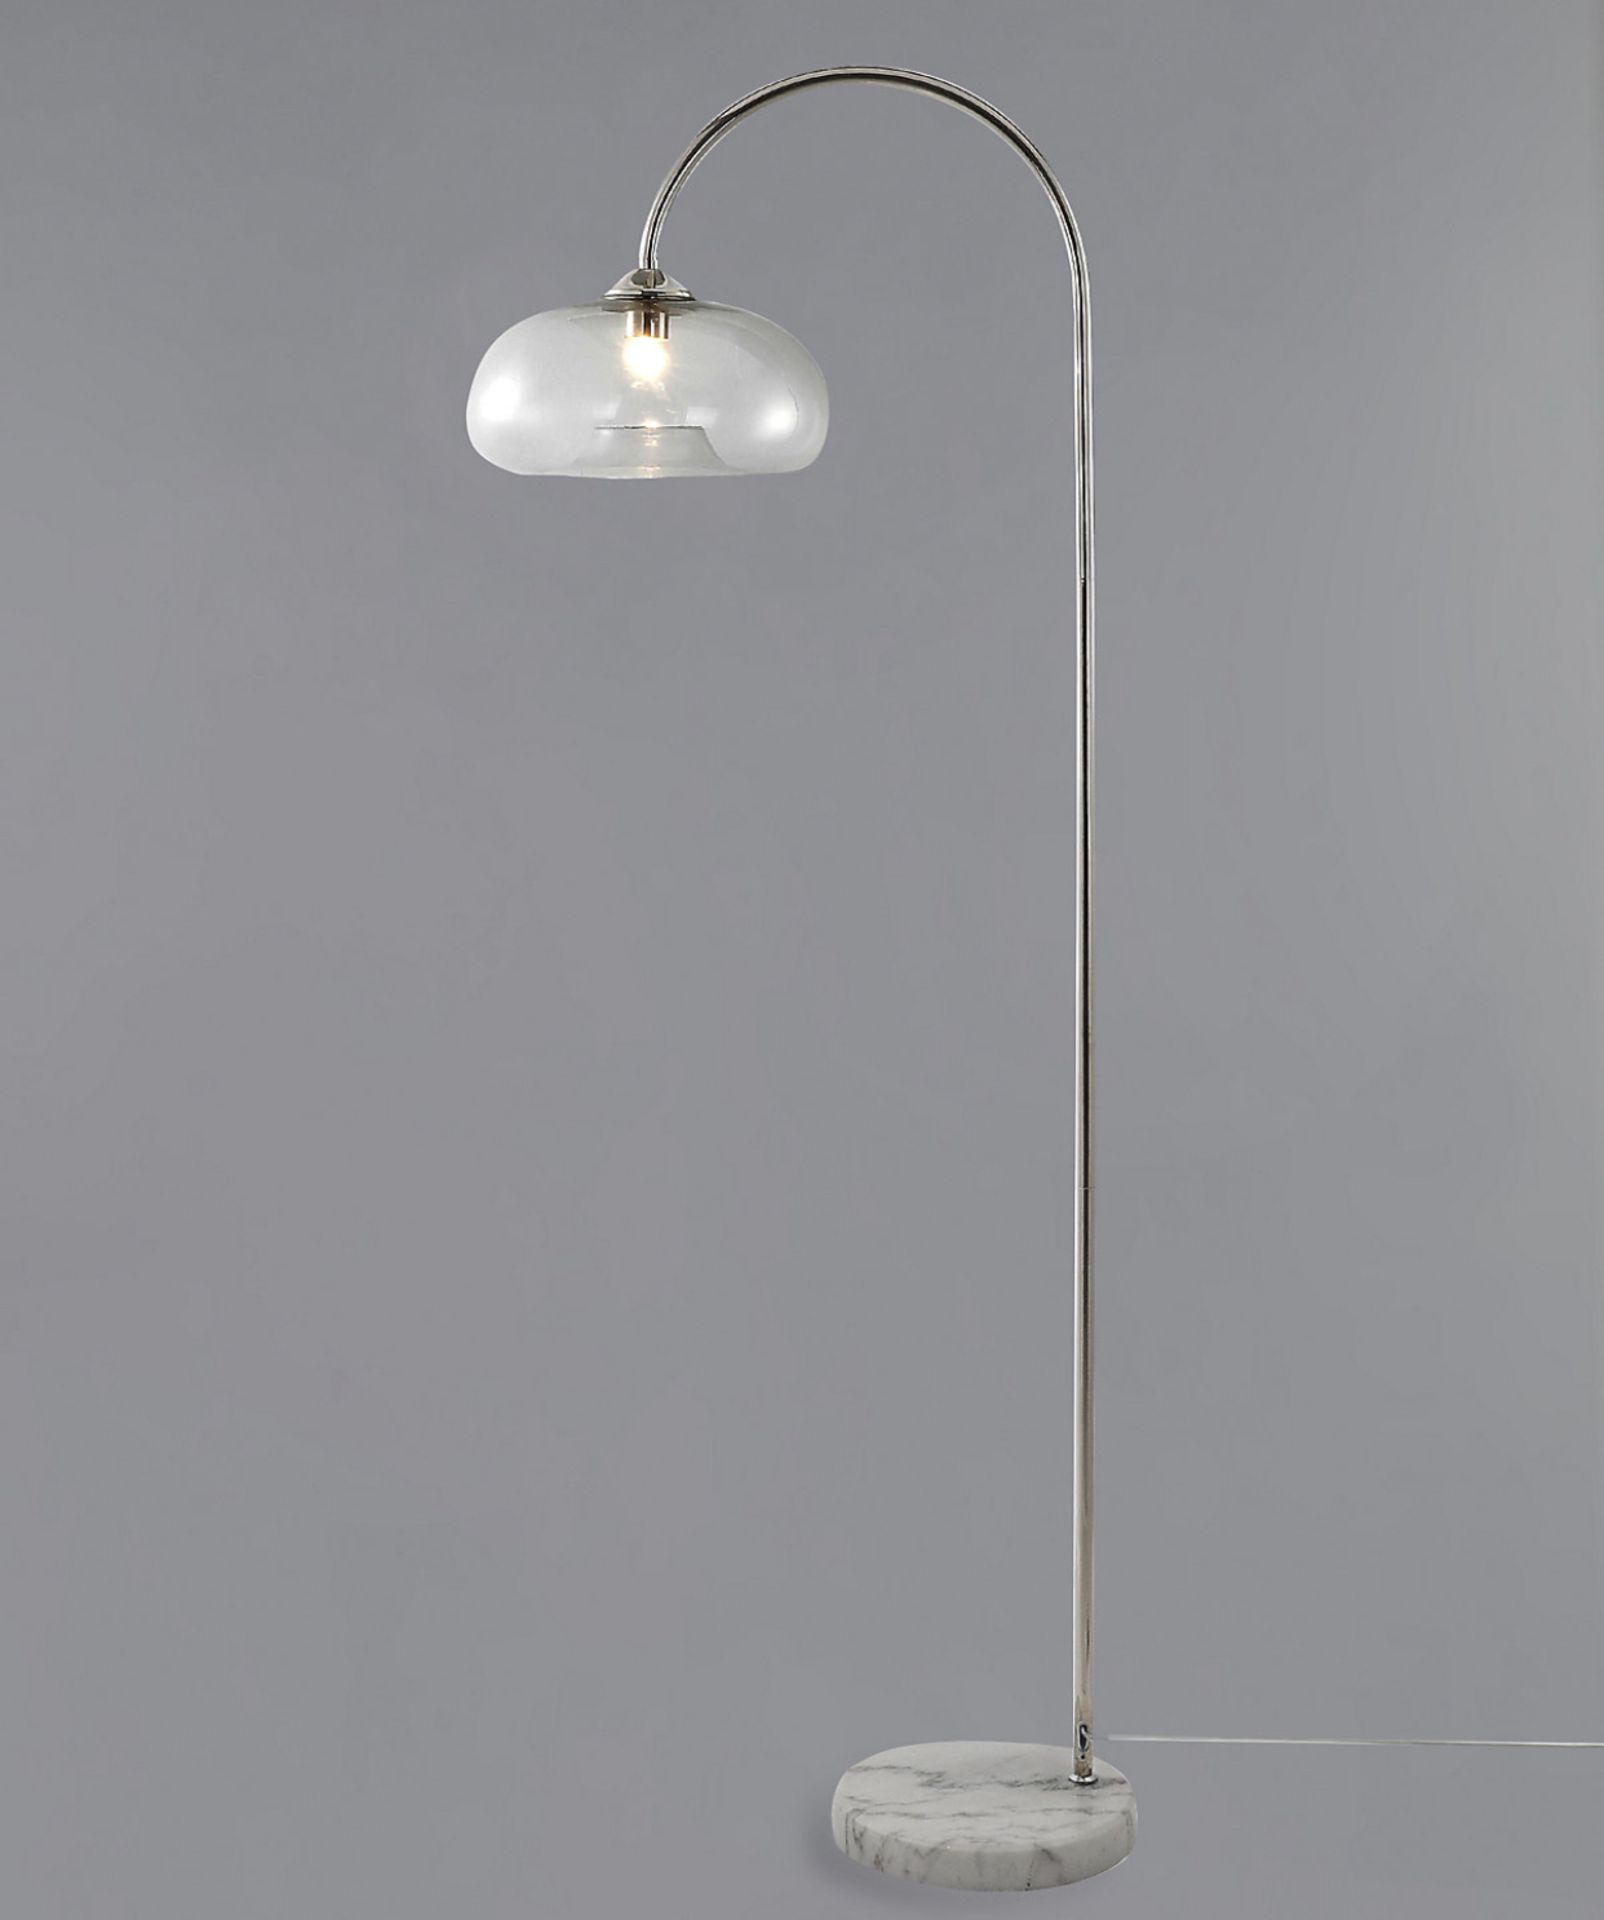 Modern Olsen Floor Lamp with Marble Effect Base RRP £149